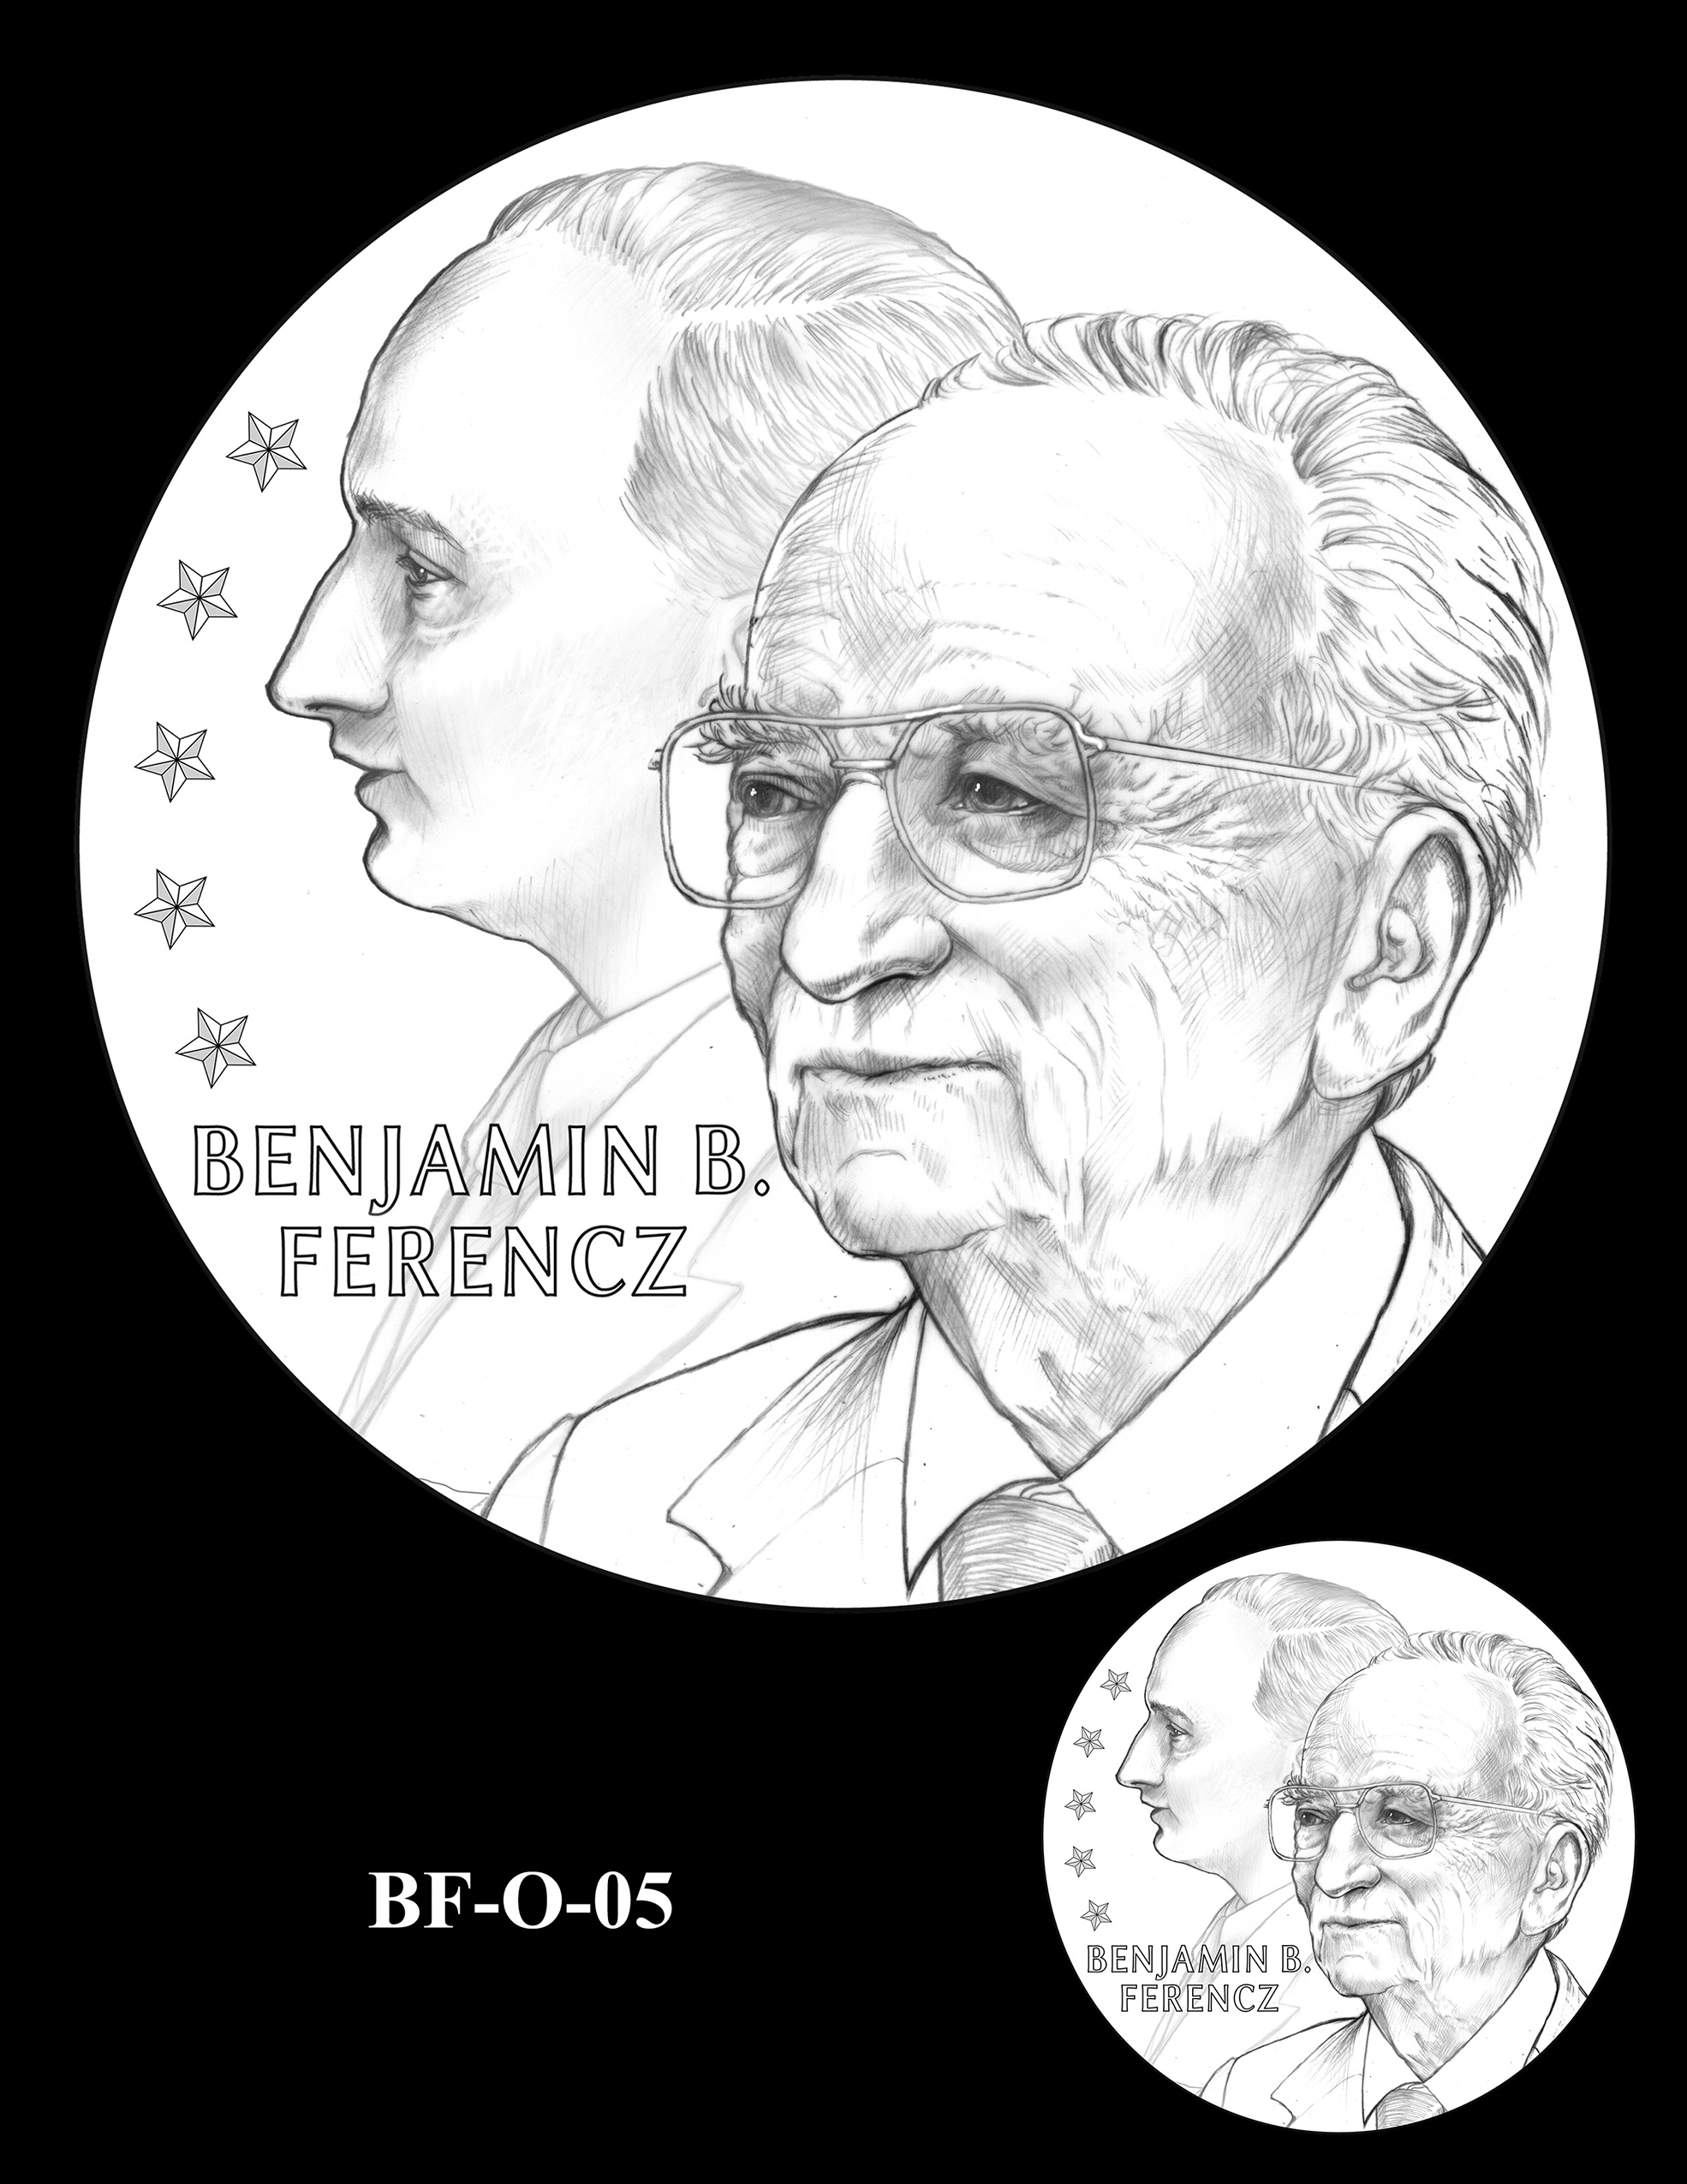 BF-O-05 -- Benjamin Ferencz Congressional Gold Medal